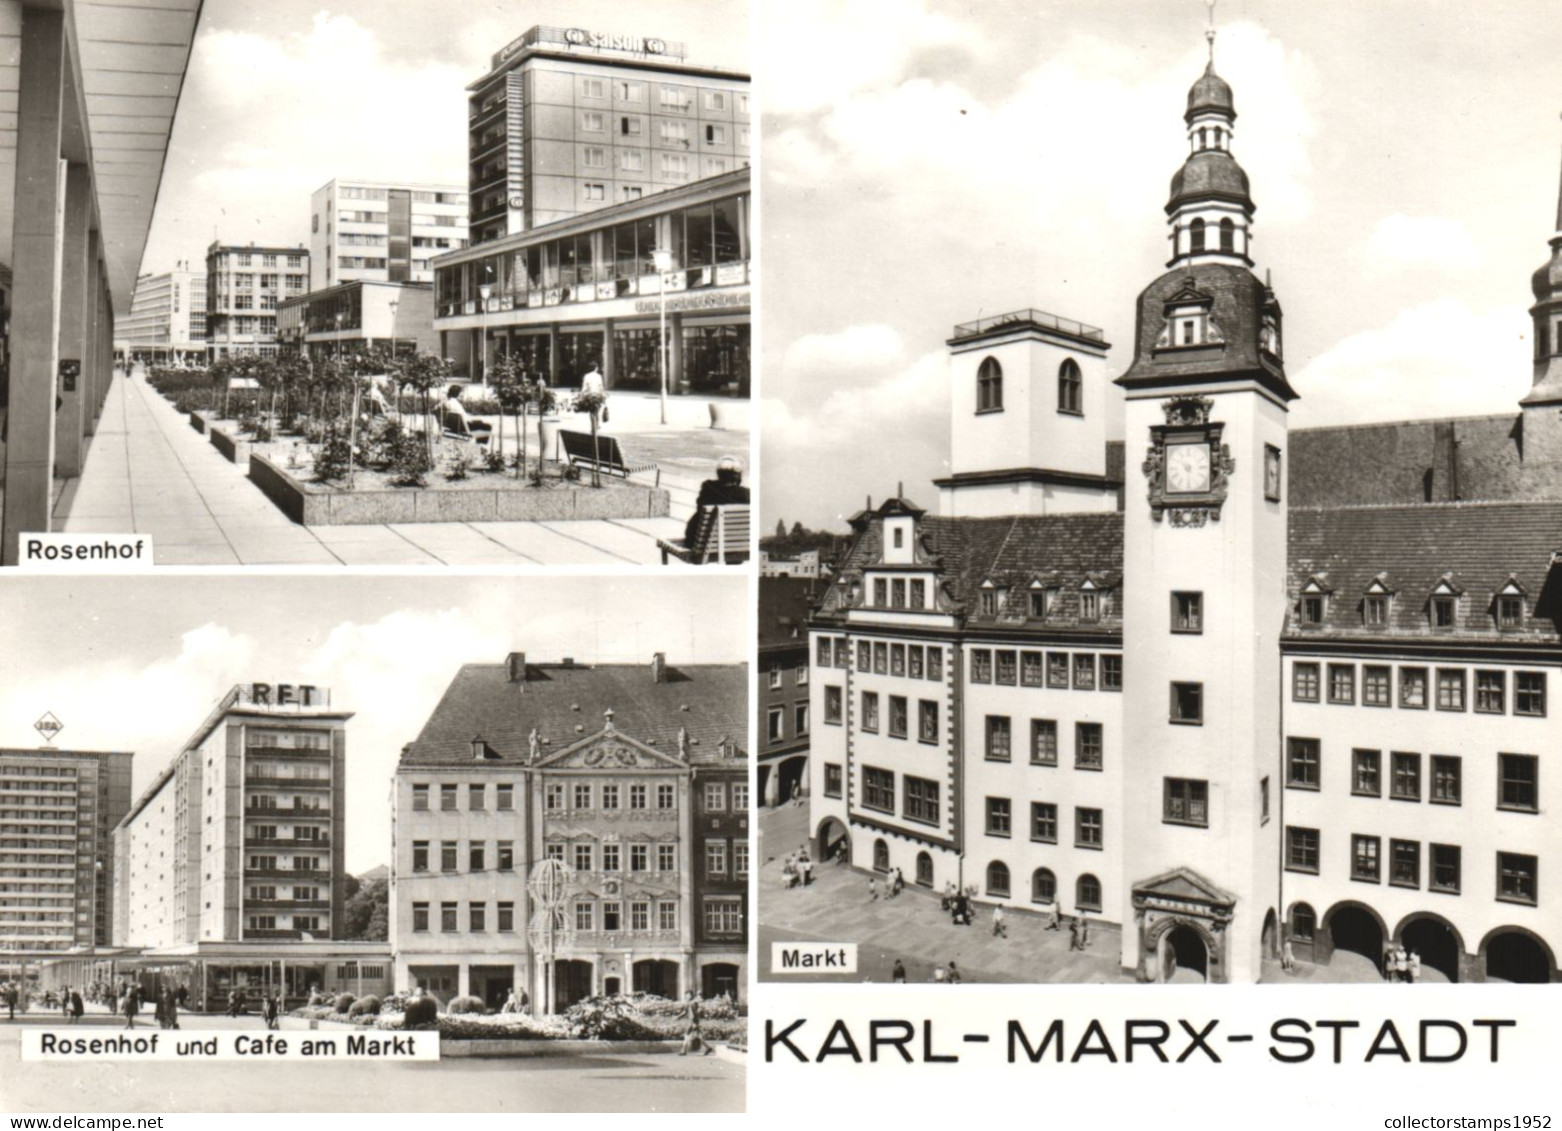 CHEMNITZ MULTIPLE VIEWS, ARCHITECTURE, TOWER WITH CLOCK, MARKET, PARK, GERMANY - Chemnitz (Karl-Marx-Stadt 1953-1990)